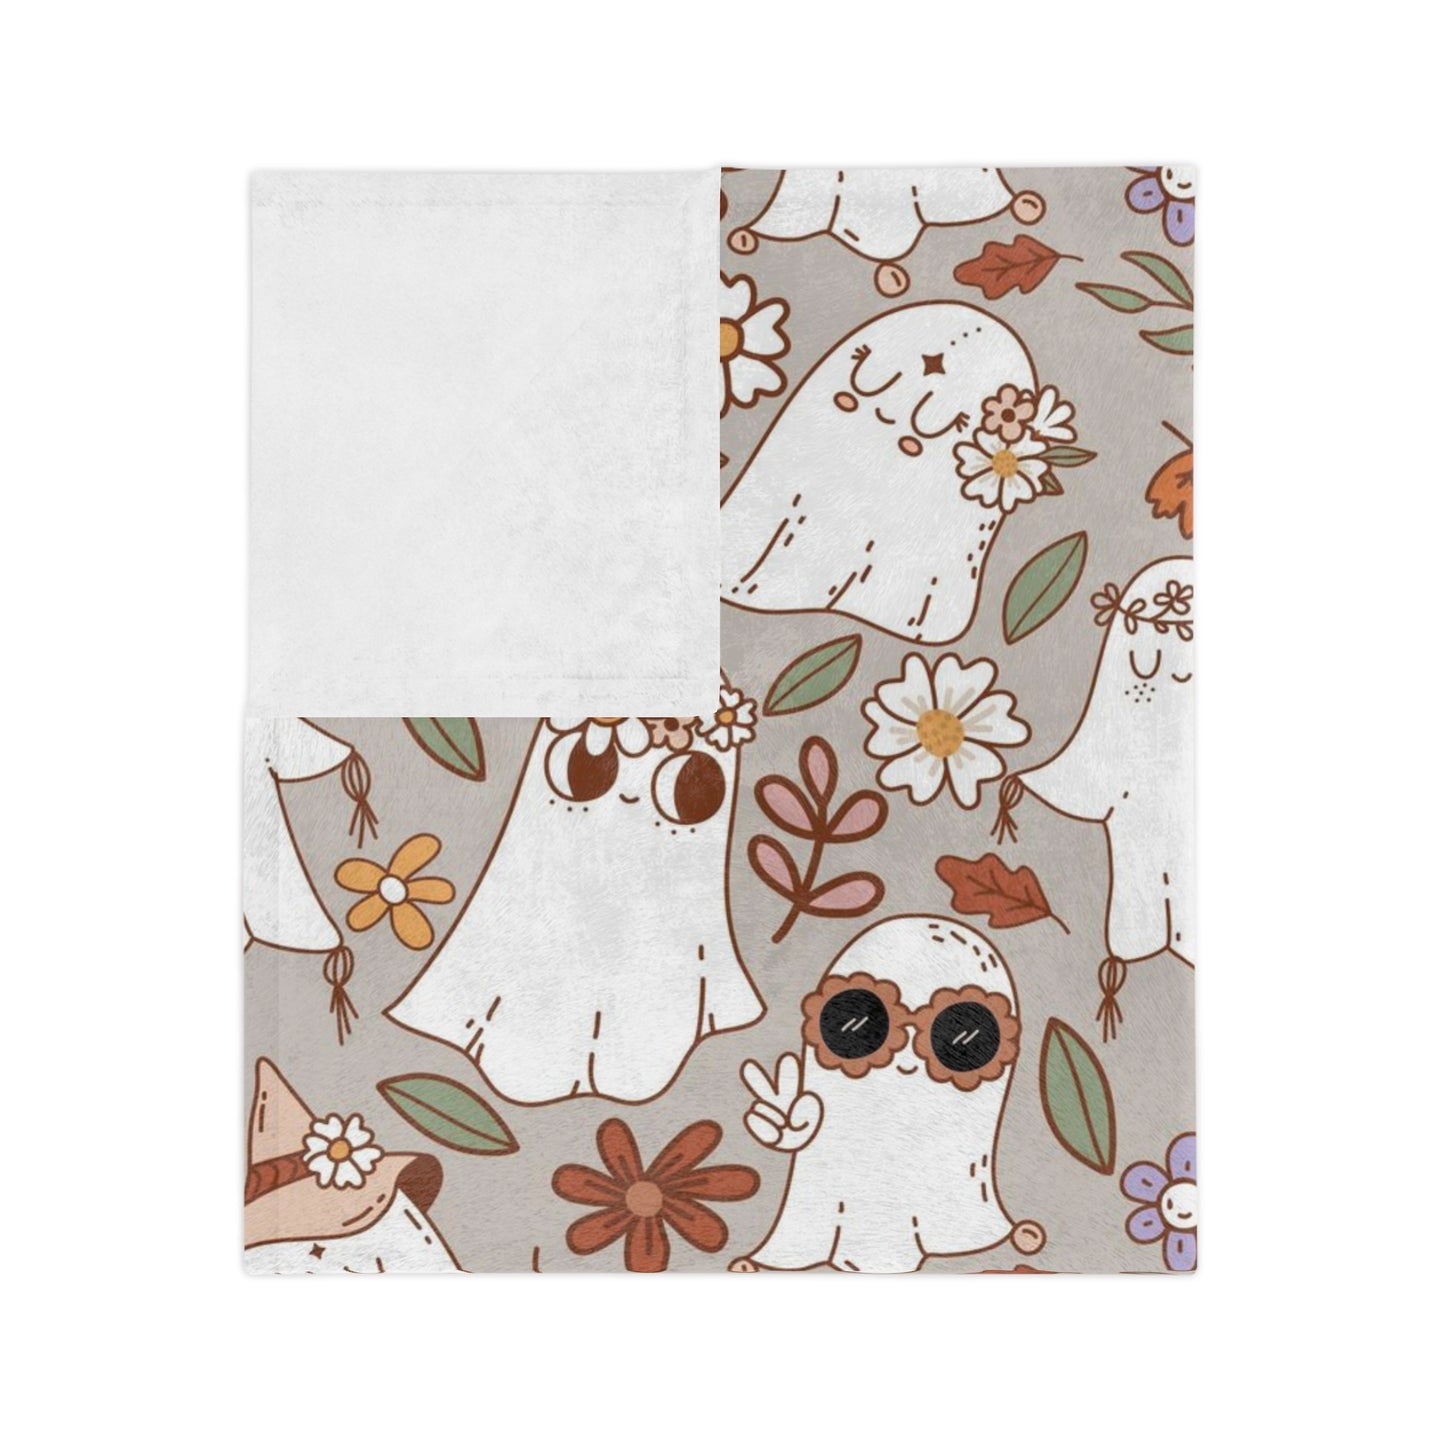 Cute ghosts with flowers Velveteen Minky Blanket for Halloween season or Halloween lovers.